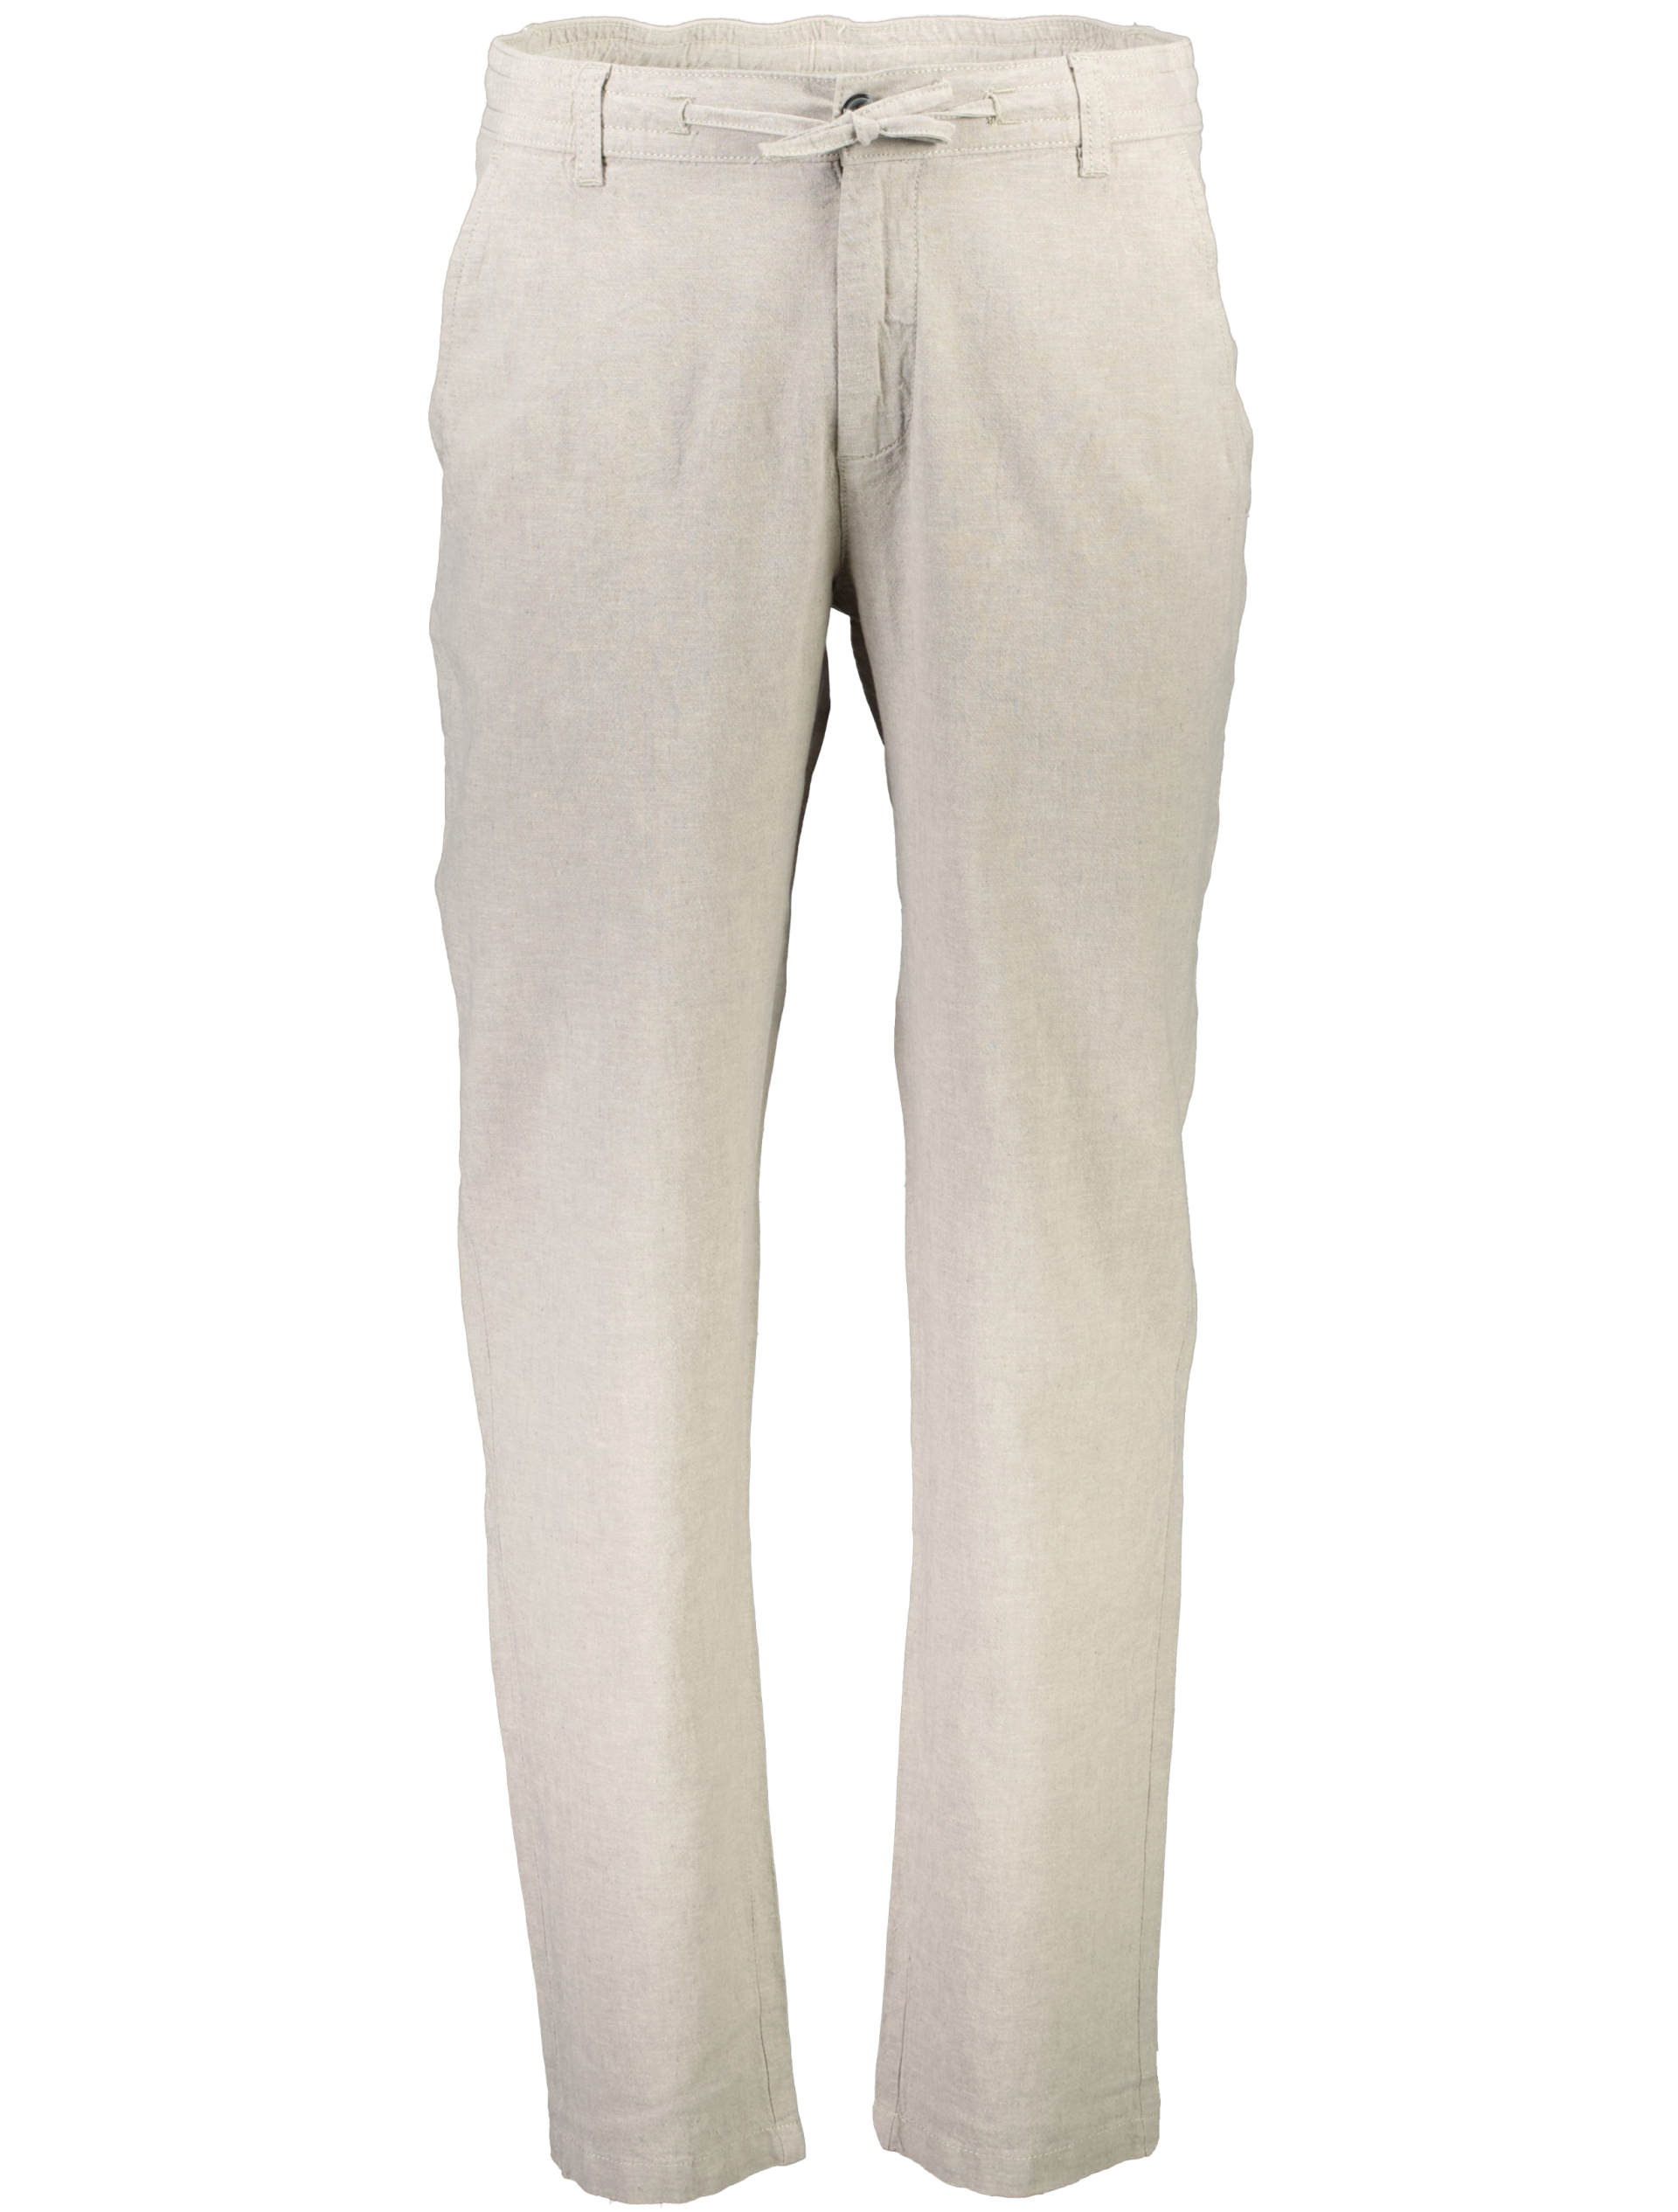 Lindbergh Linen pants grey / grey